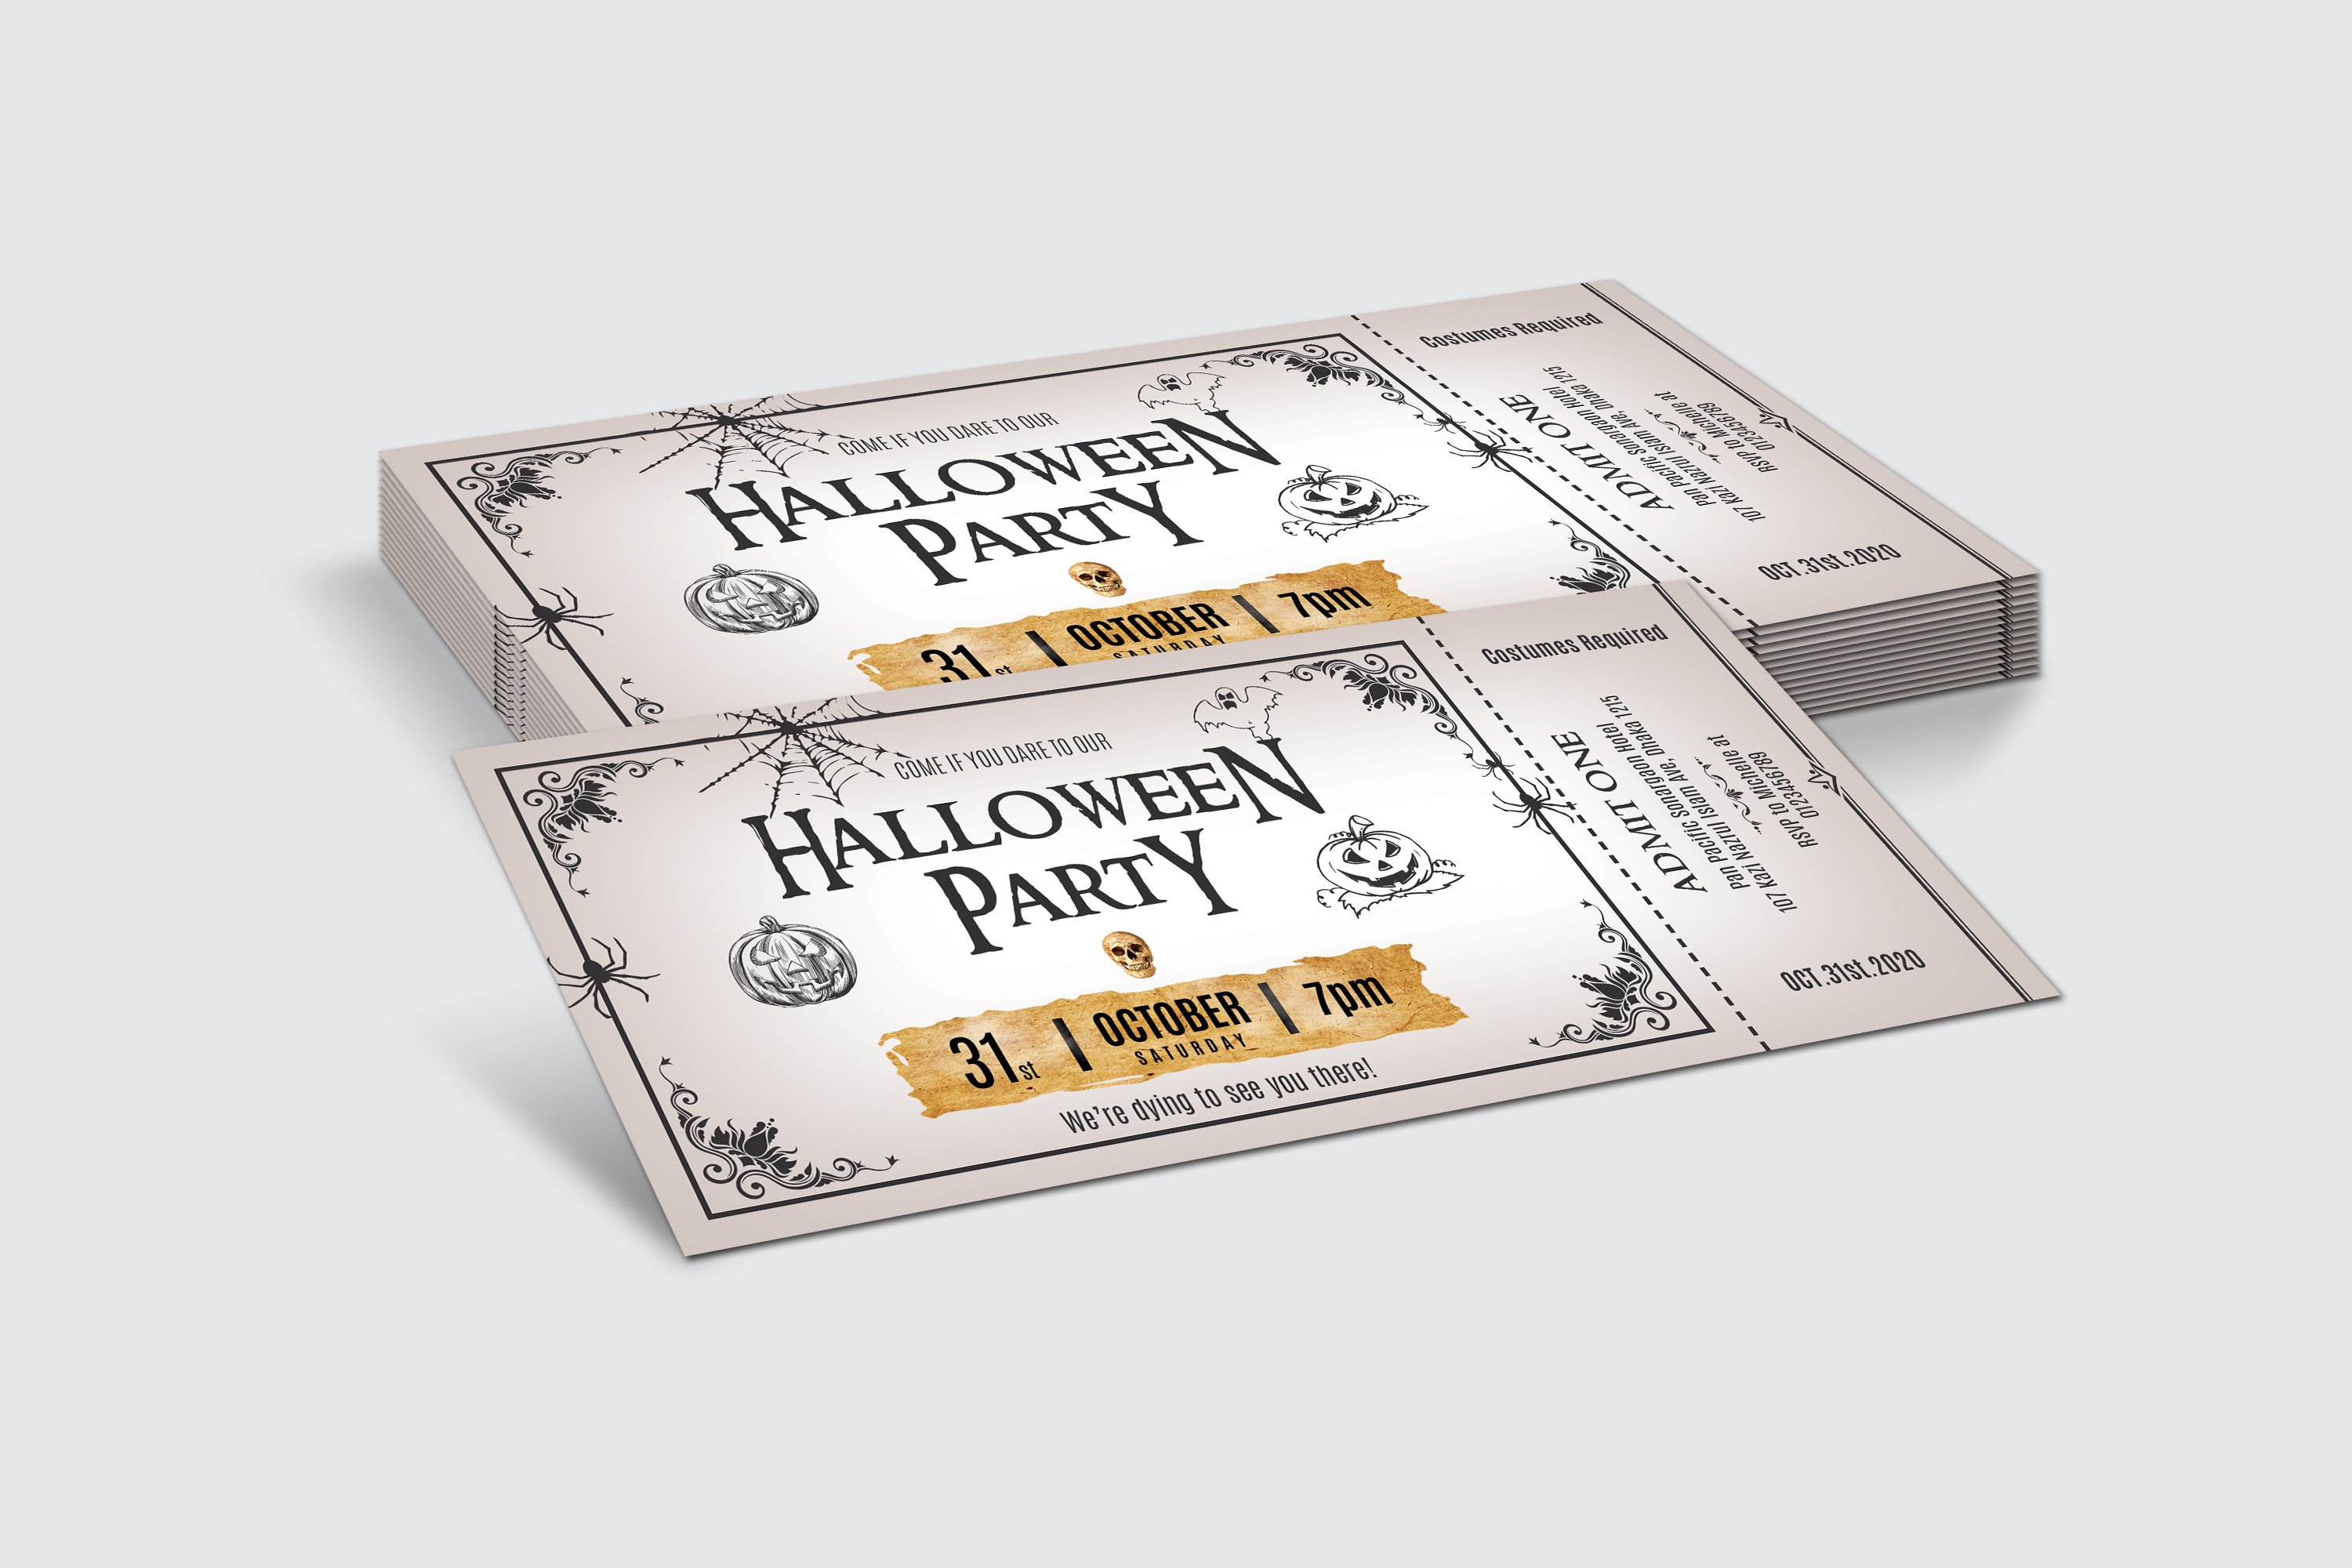 Halloween Ticket cover image.